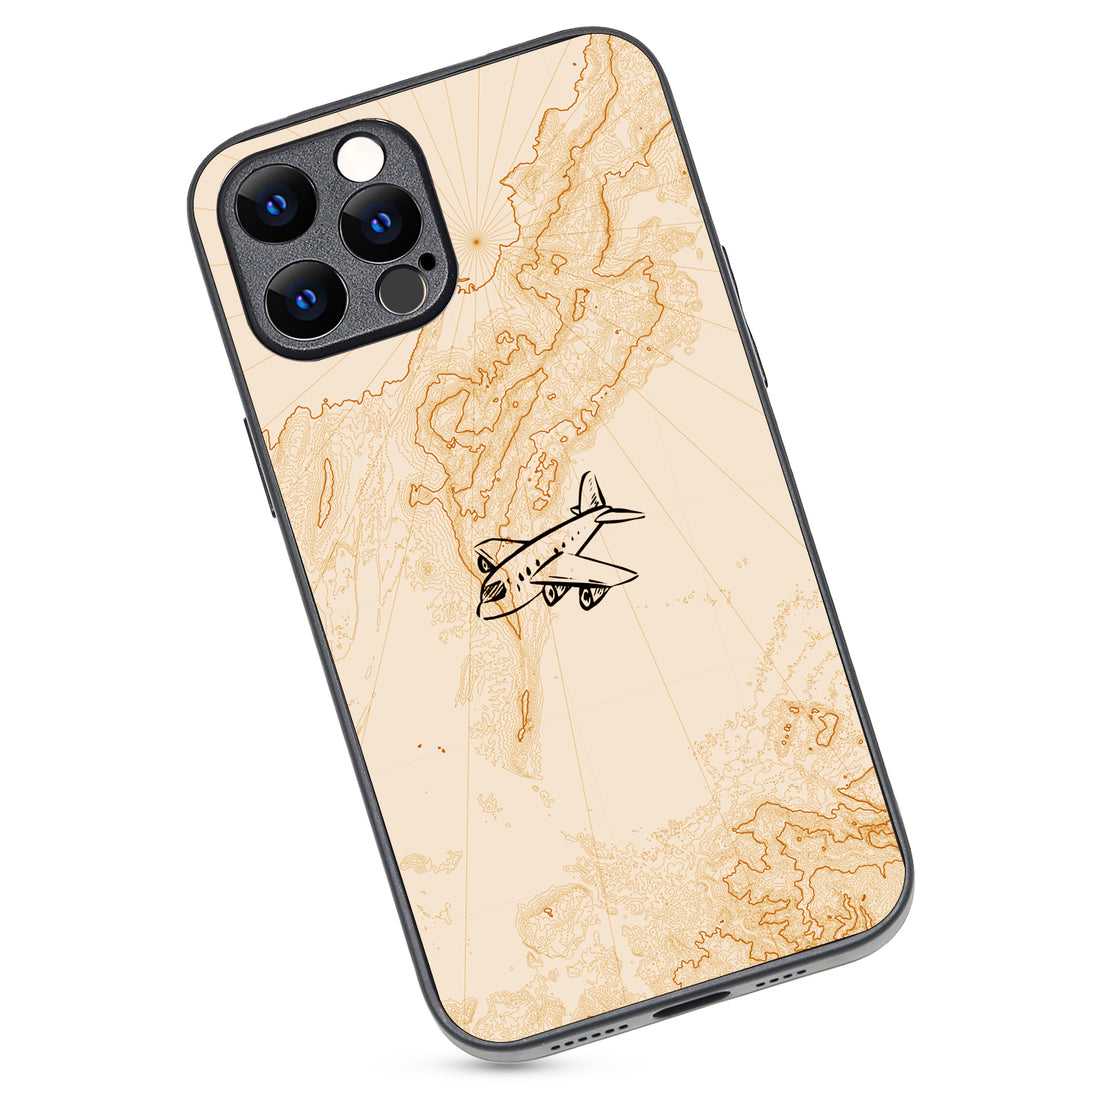 Aeroplane  Travel iPhone 12 Pro Max Case